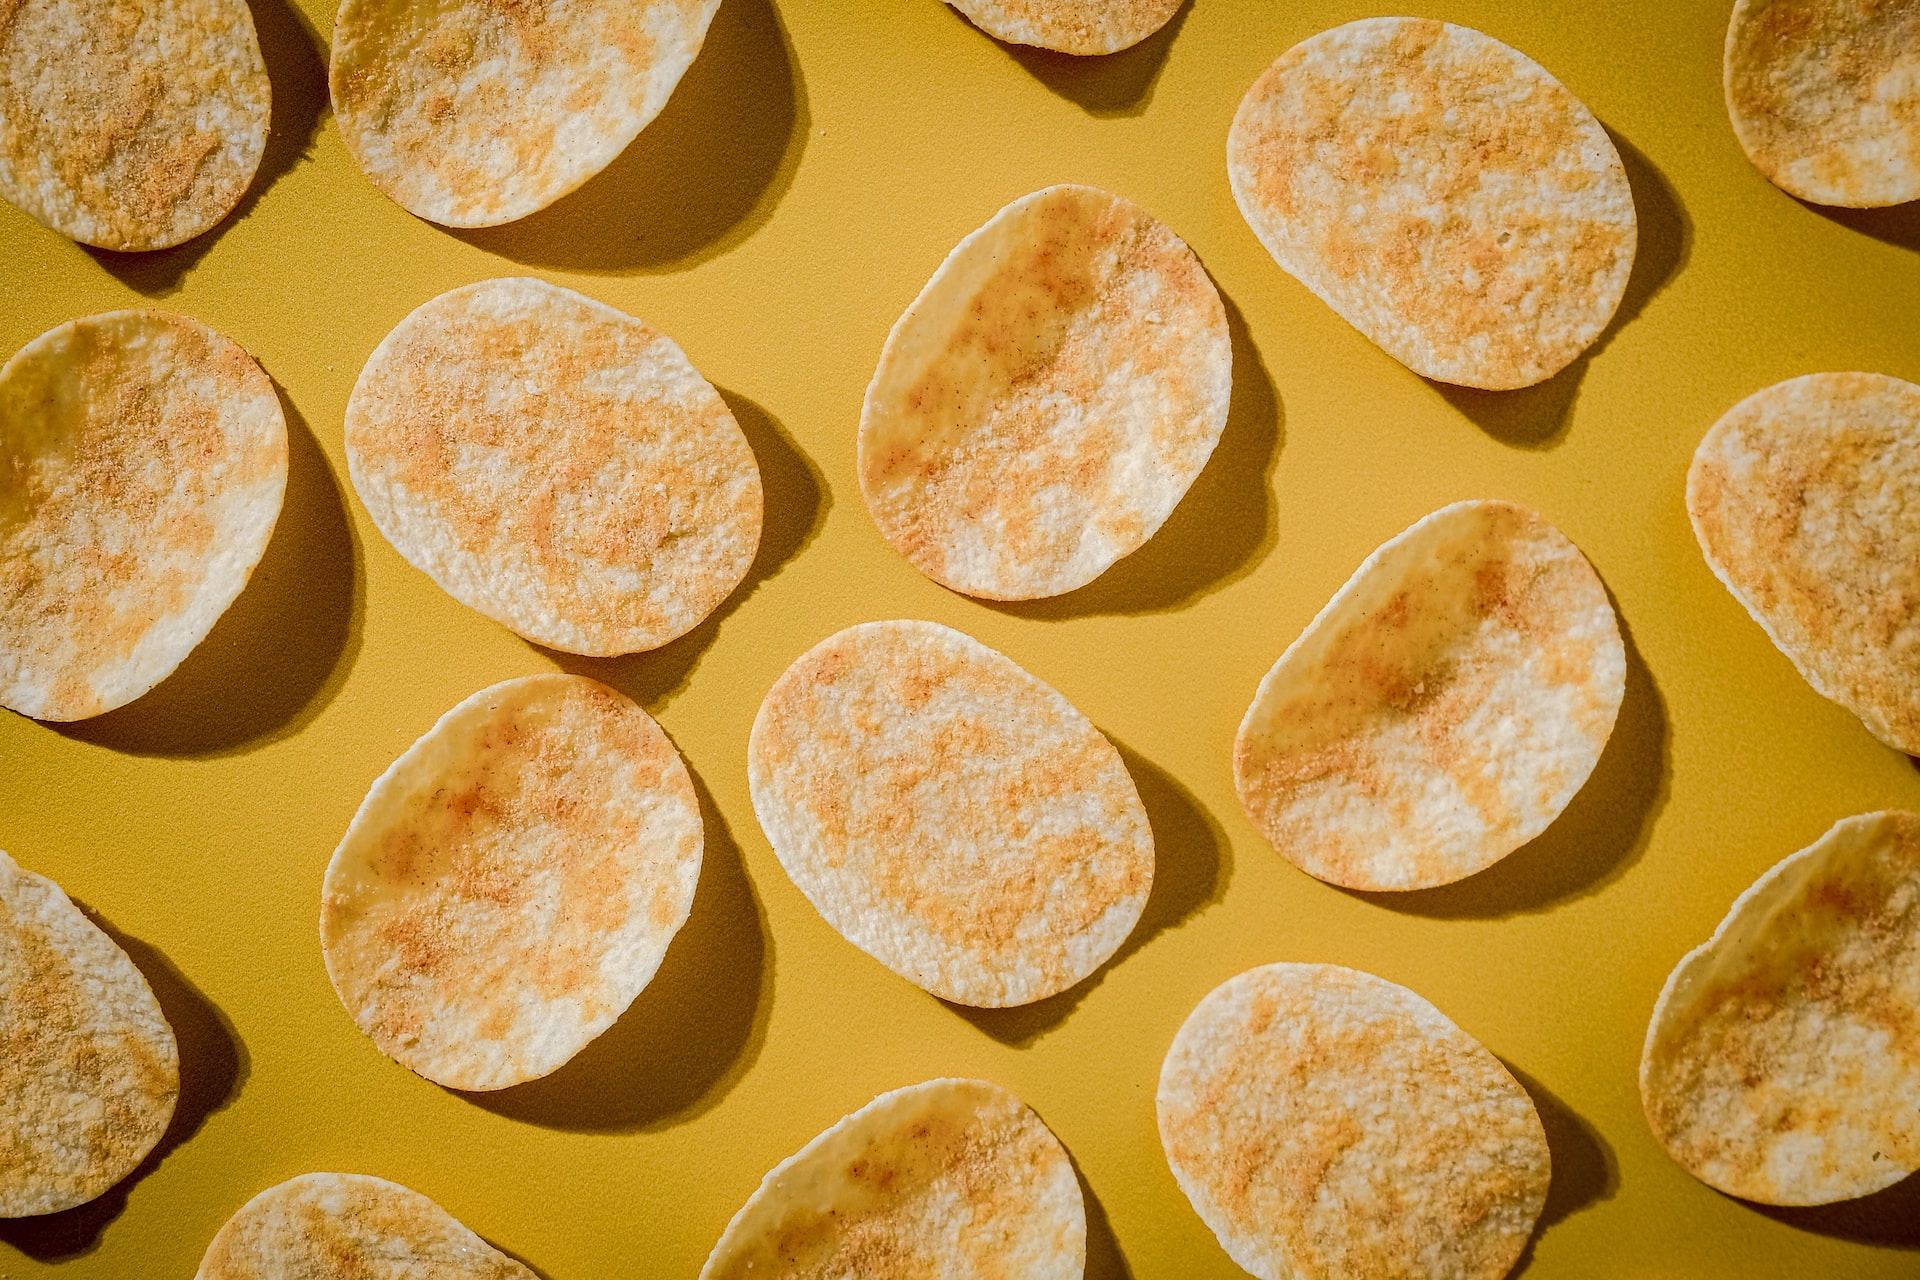 Chips (Photo via Unsplash/Jeff Siepman)